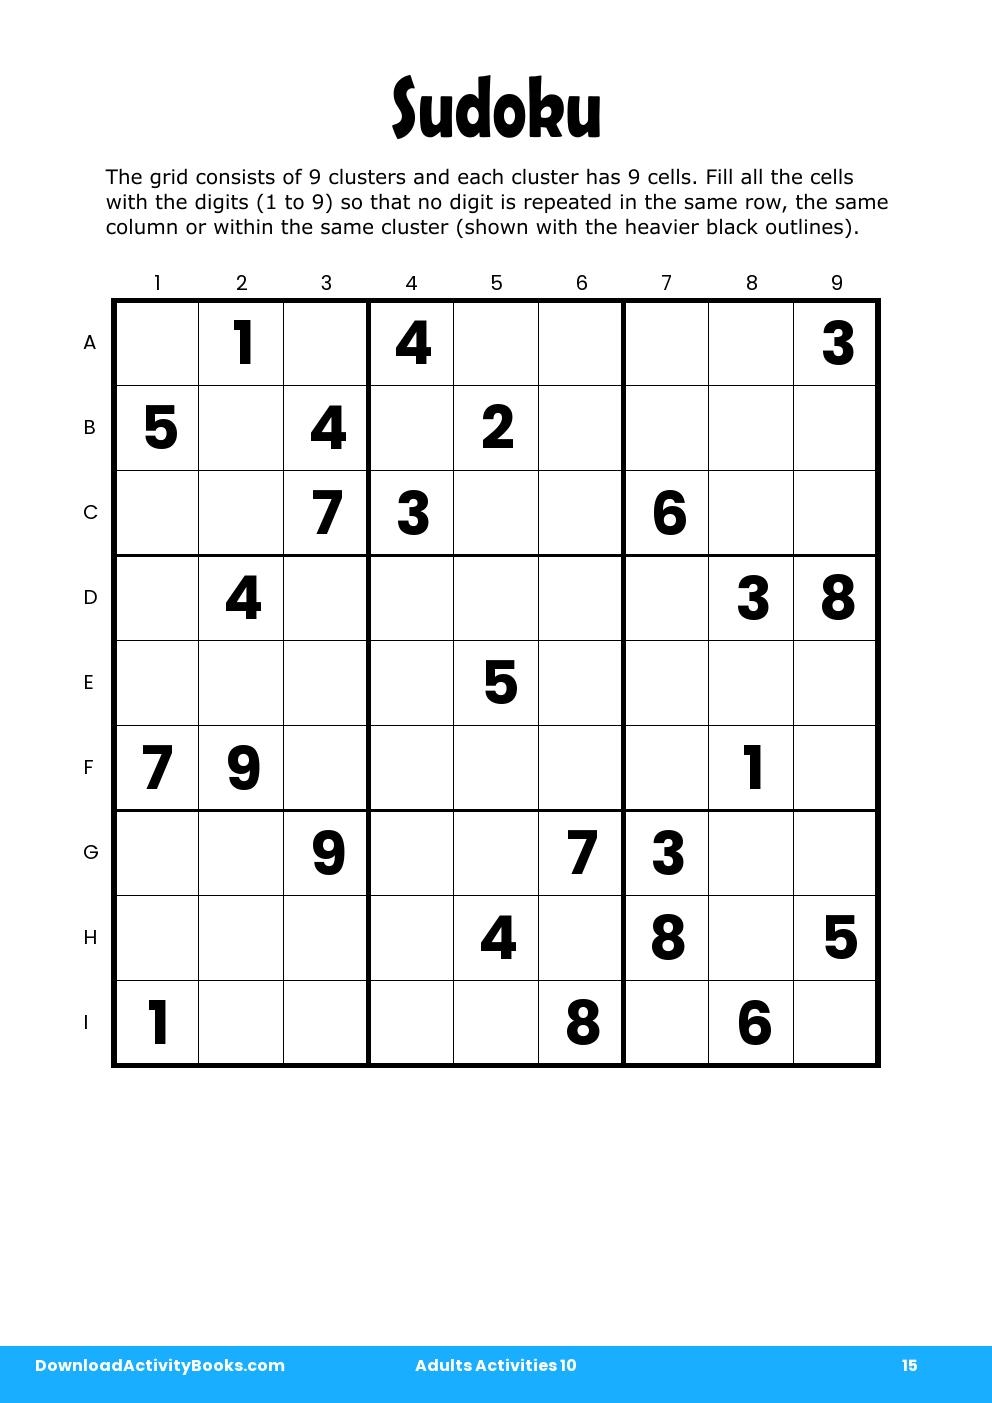 Sudoku in Adults Activities 10